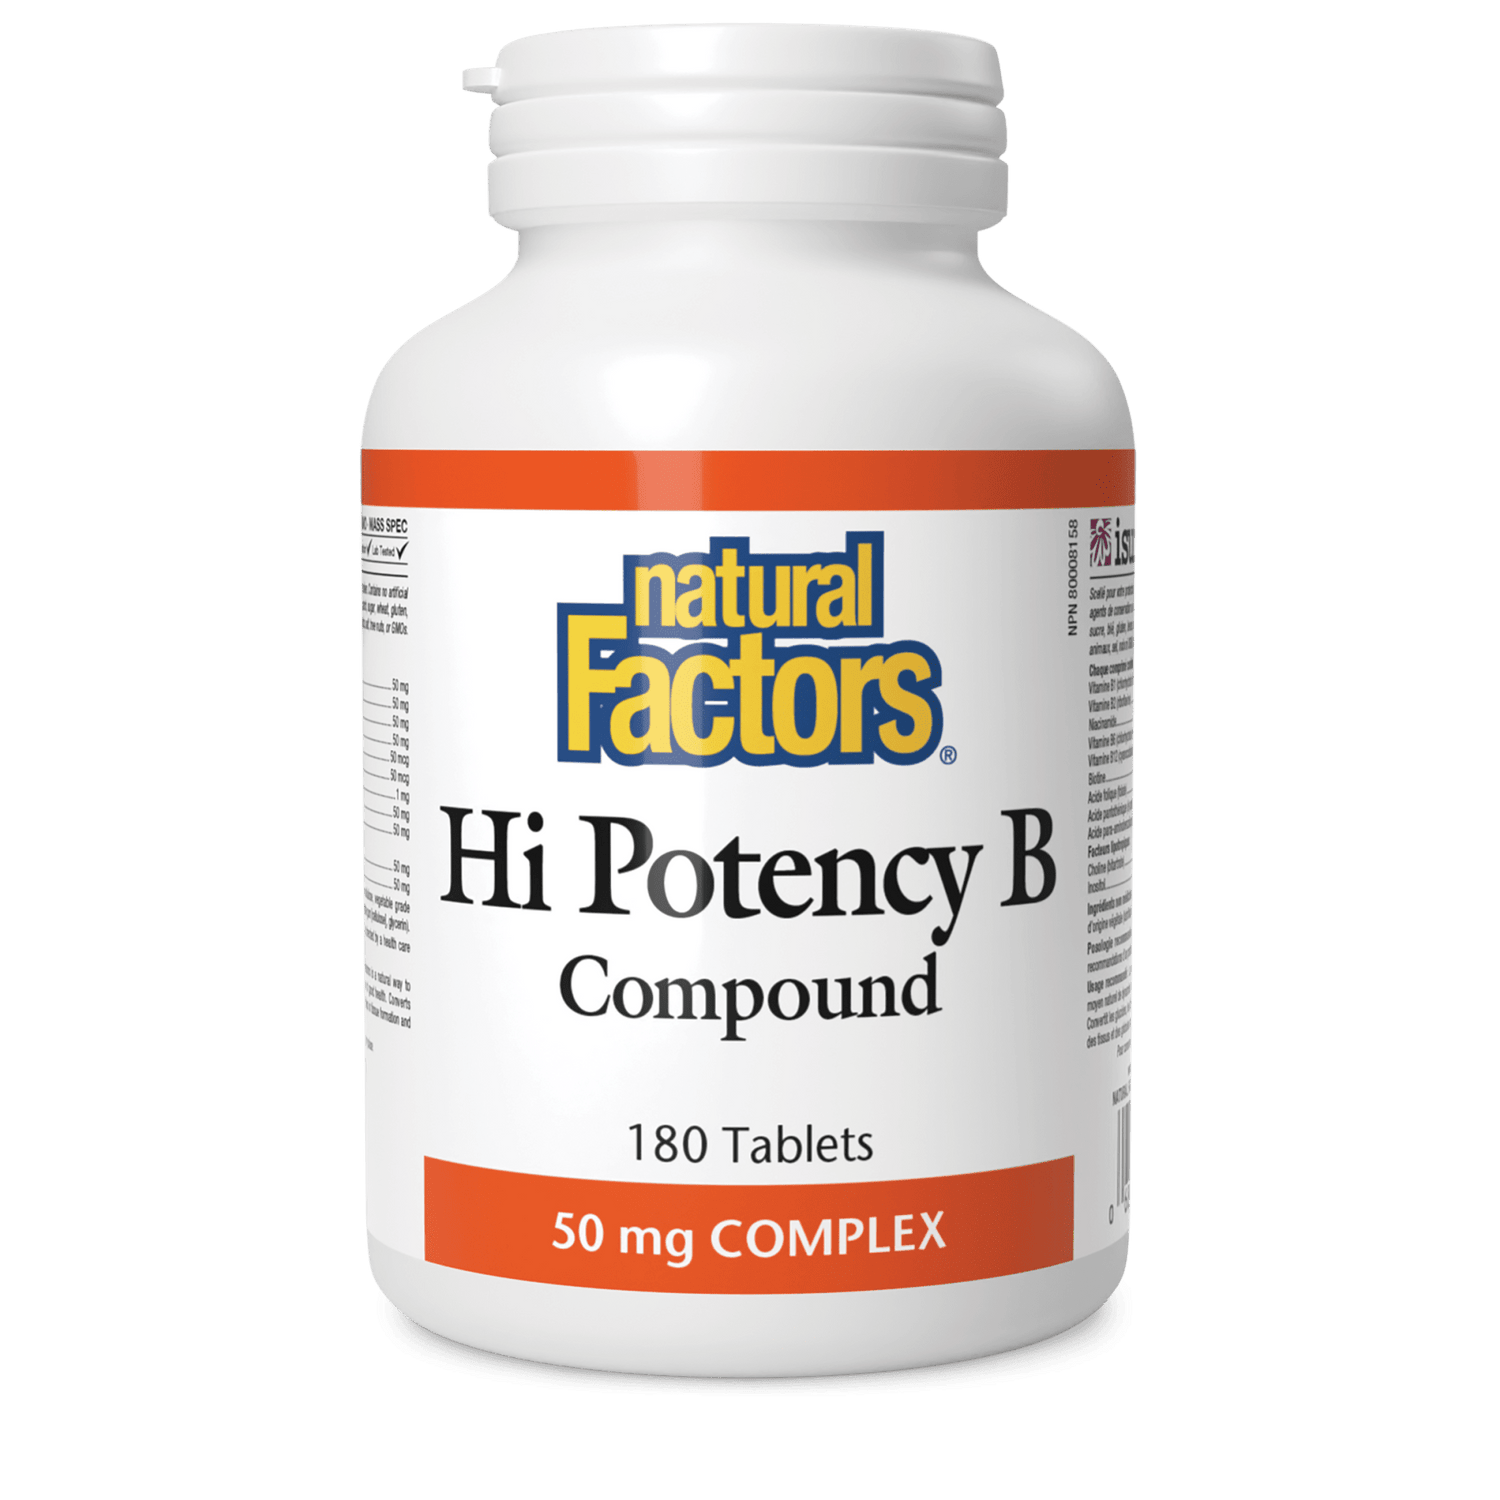 Hi Potency B Compound 50 mg, Natural Factors|v|image|1106